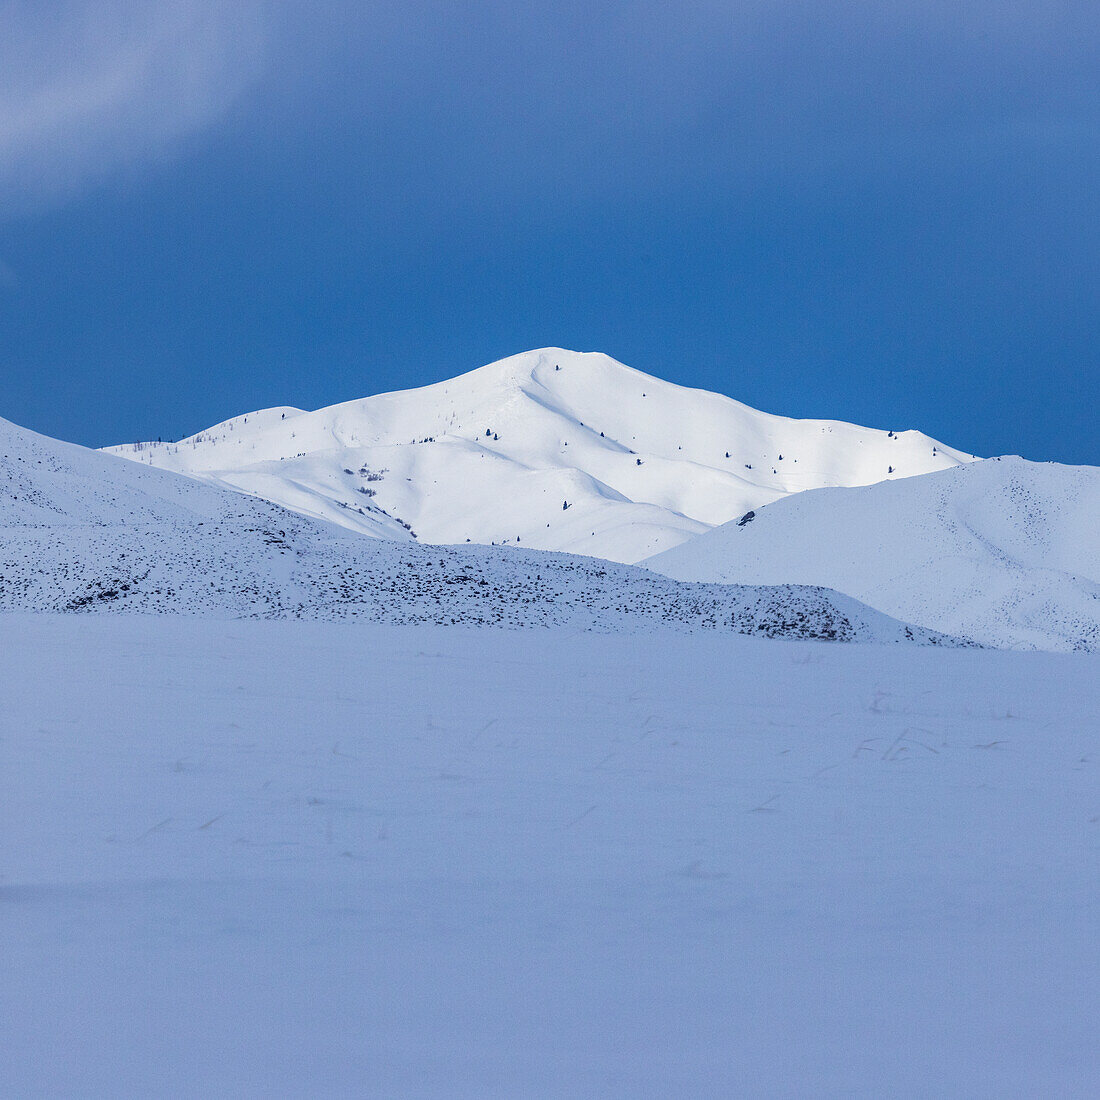 United States, Idaho, Fairfield, Snowy mountain landscape in winter